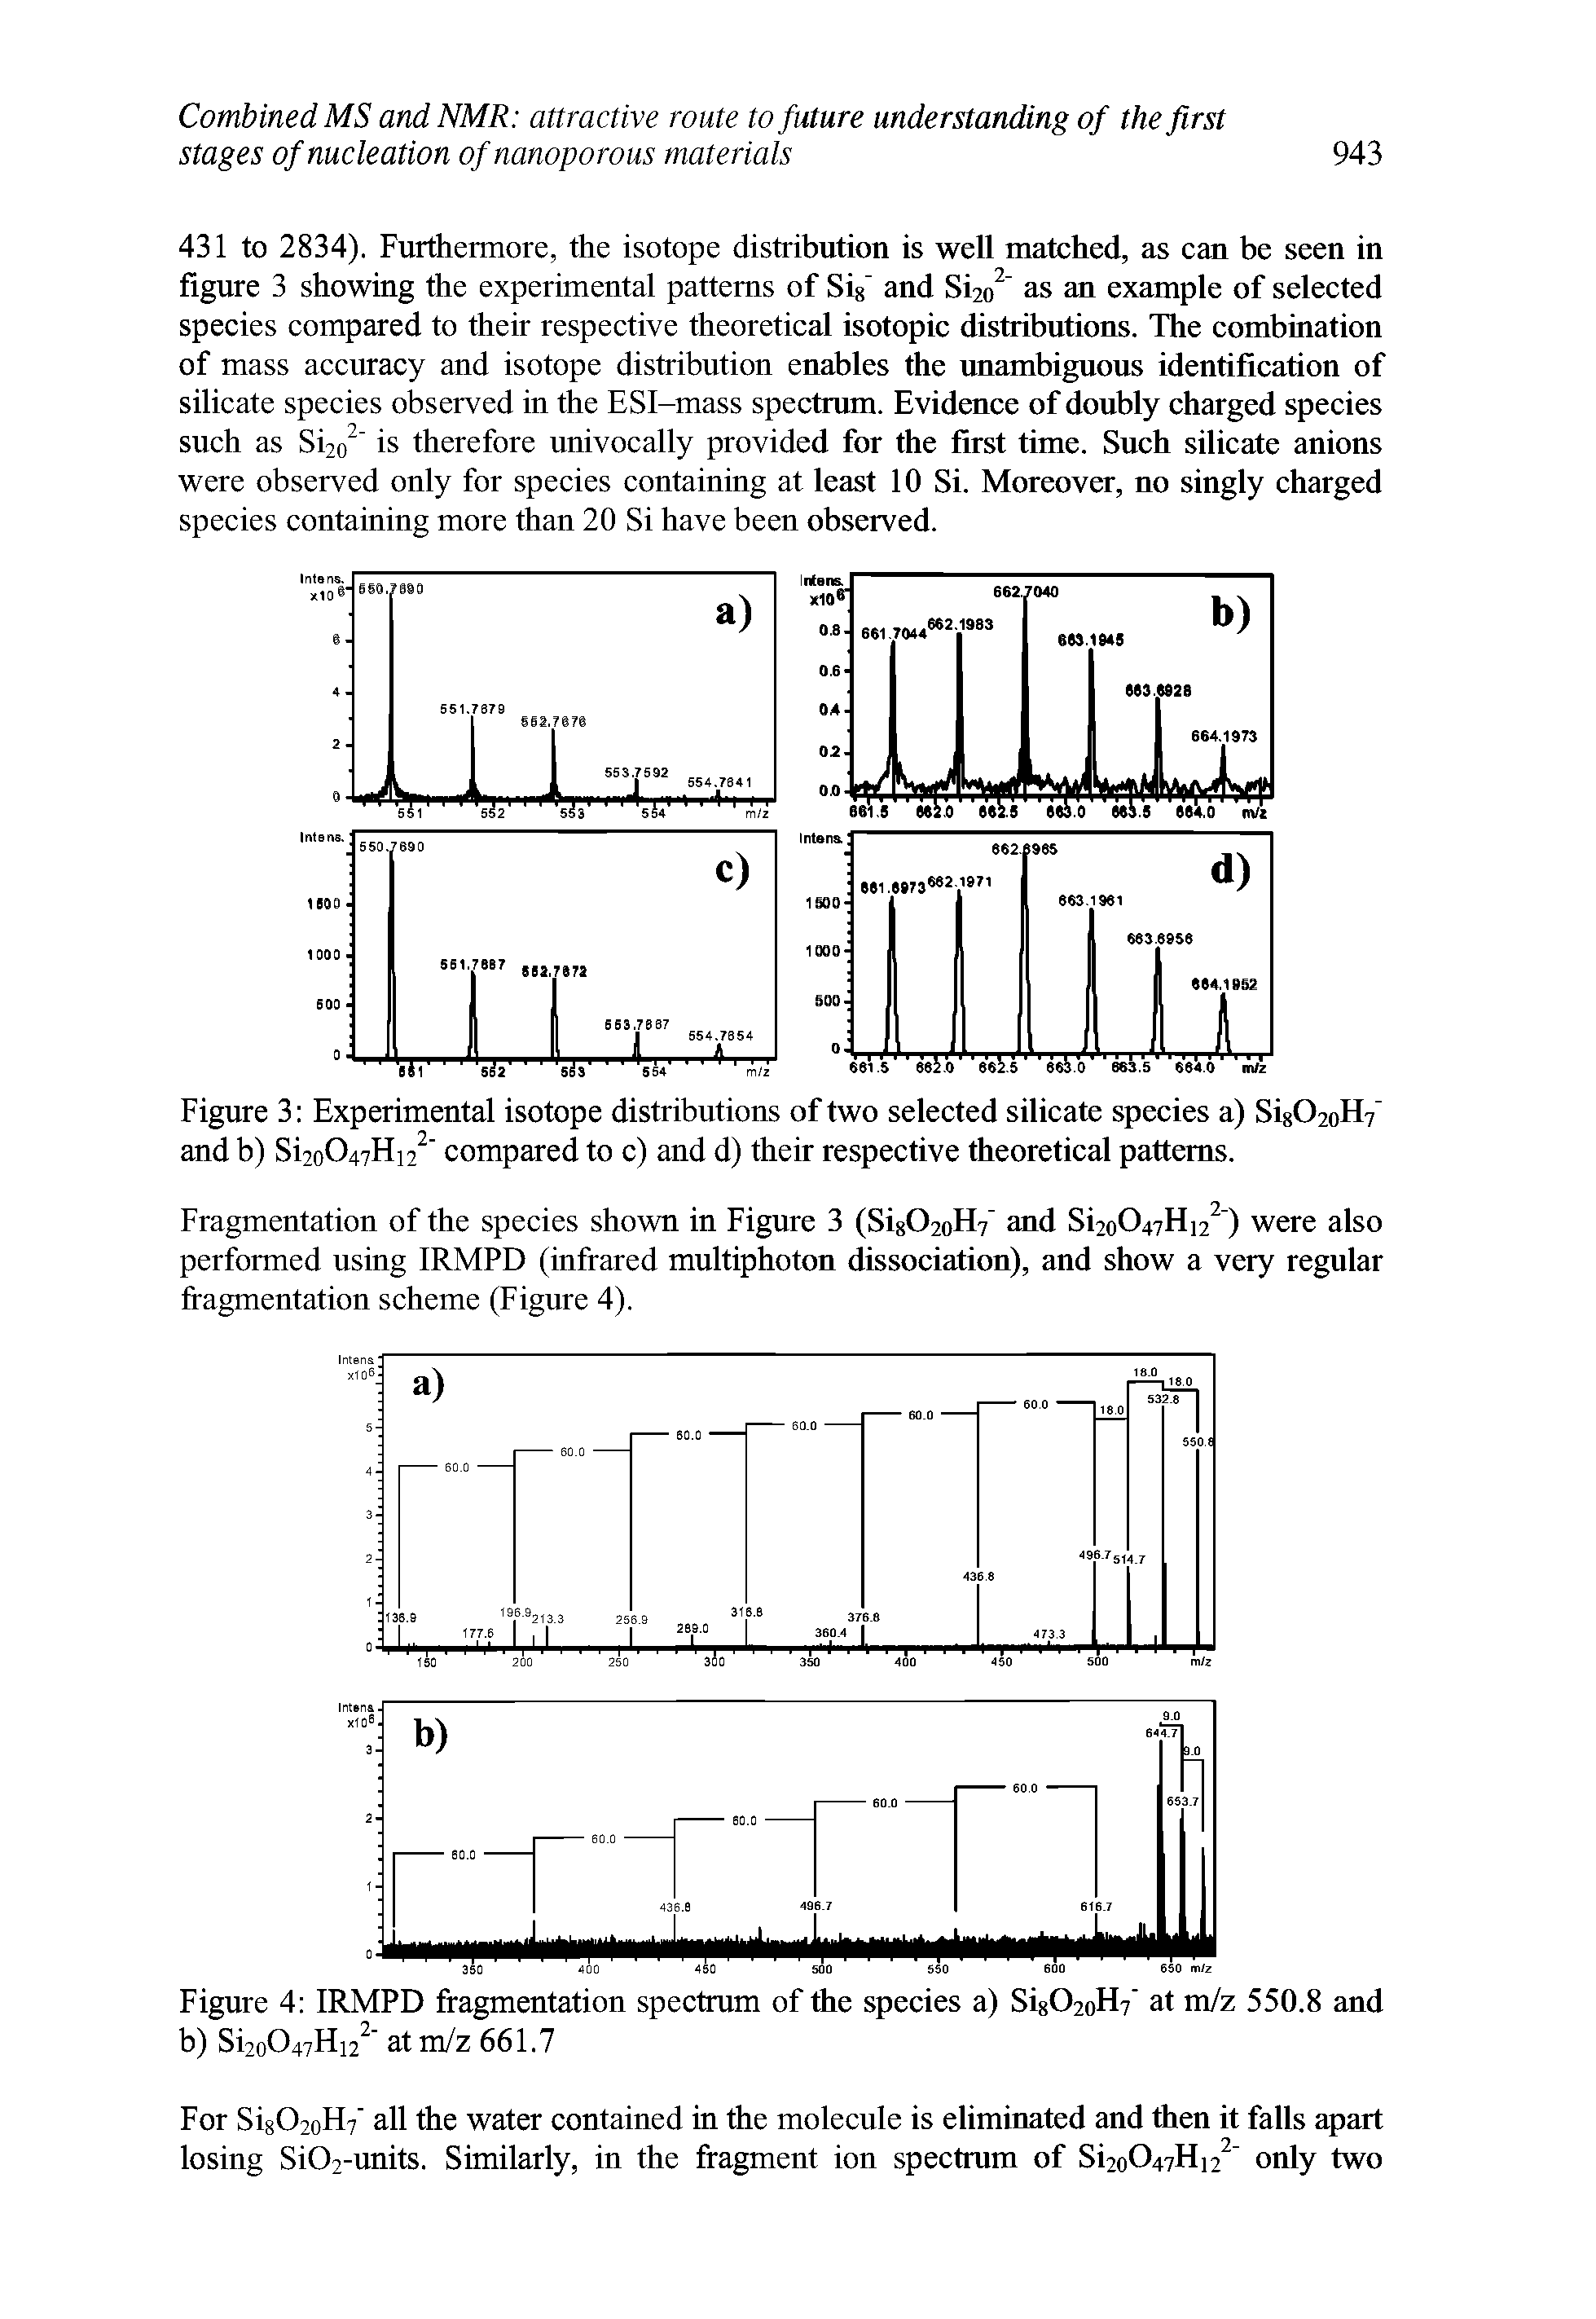 Figure 4 IRMPD fragmentation spectrum of the species a) SisO20H7" at m/z 550.8 and b) Si2o047Hi22 at m/z 661.7...